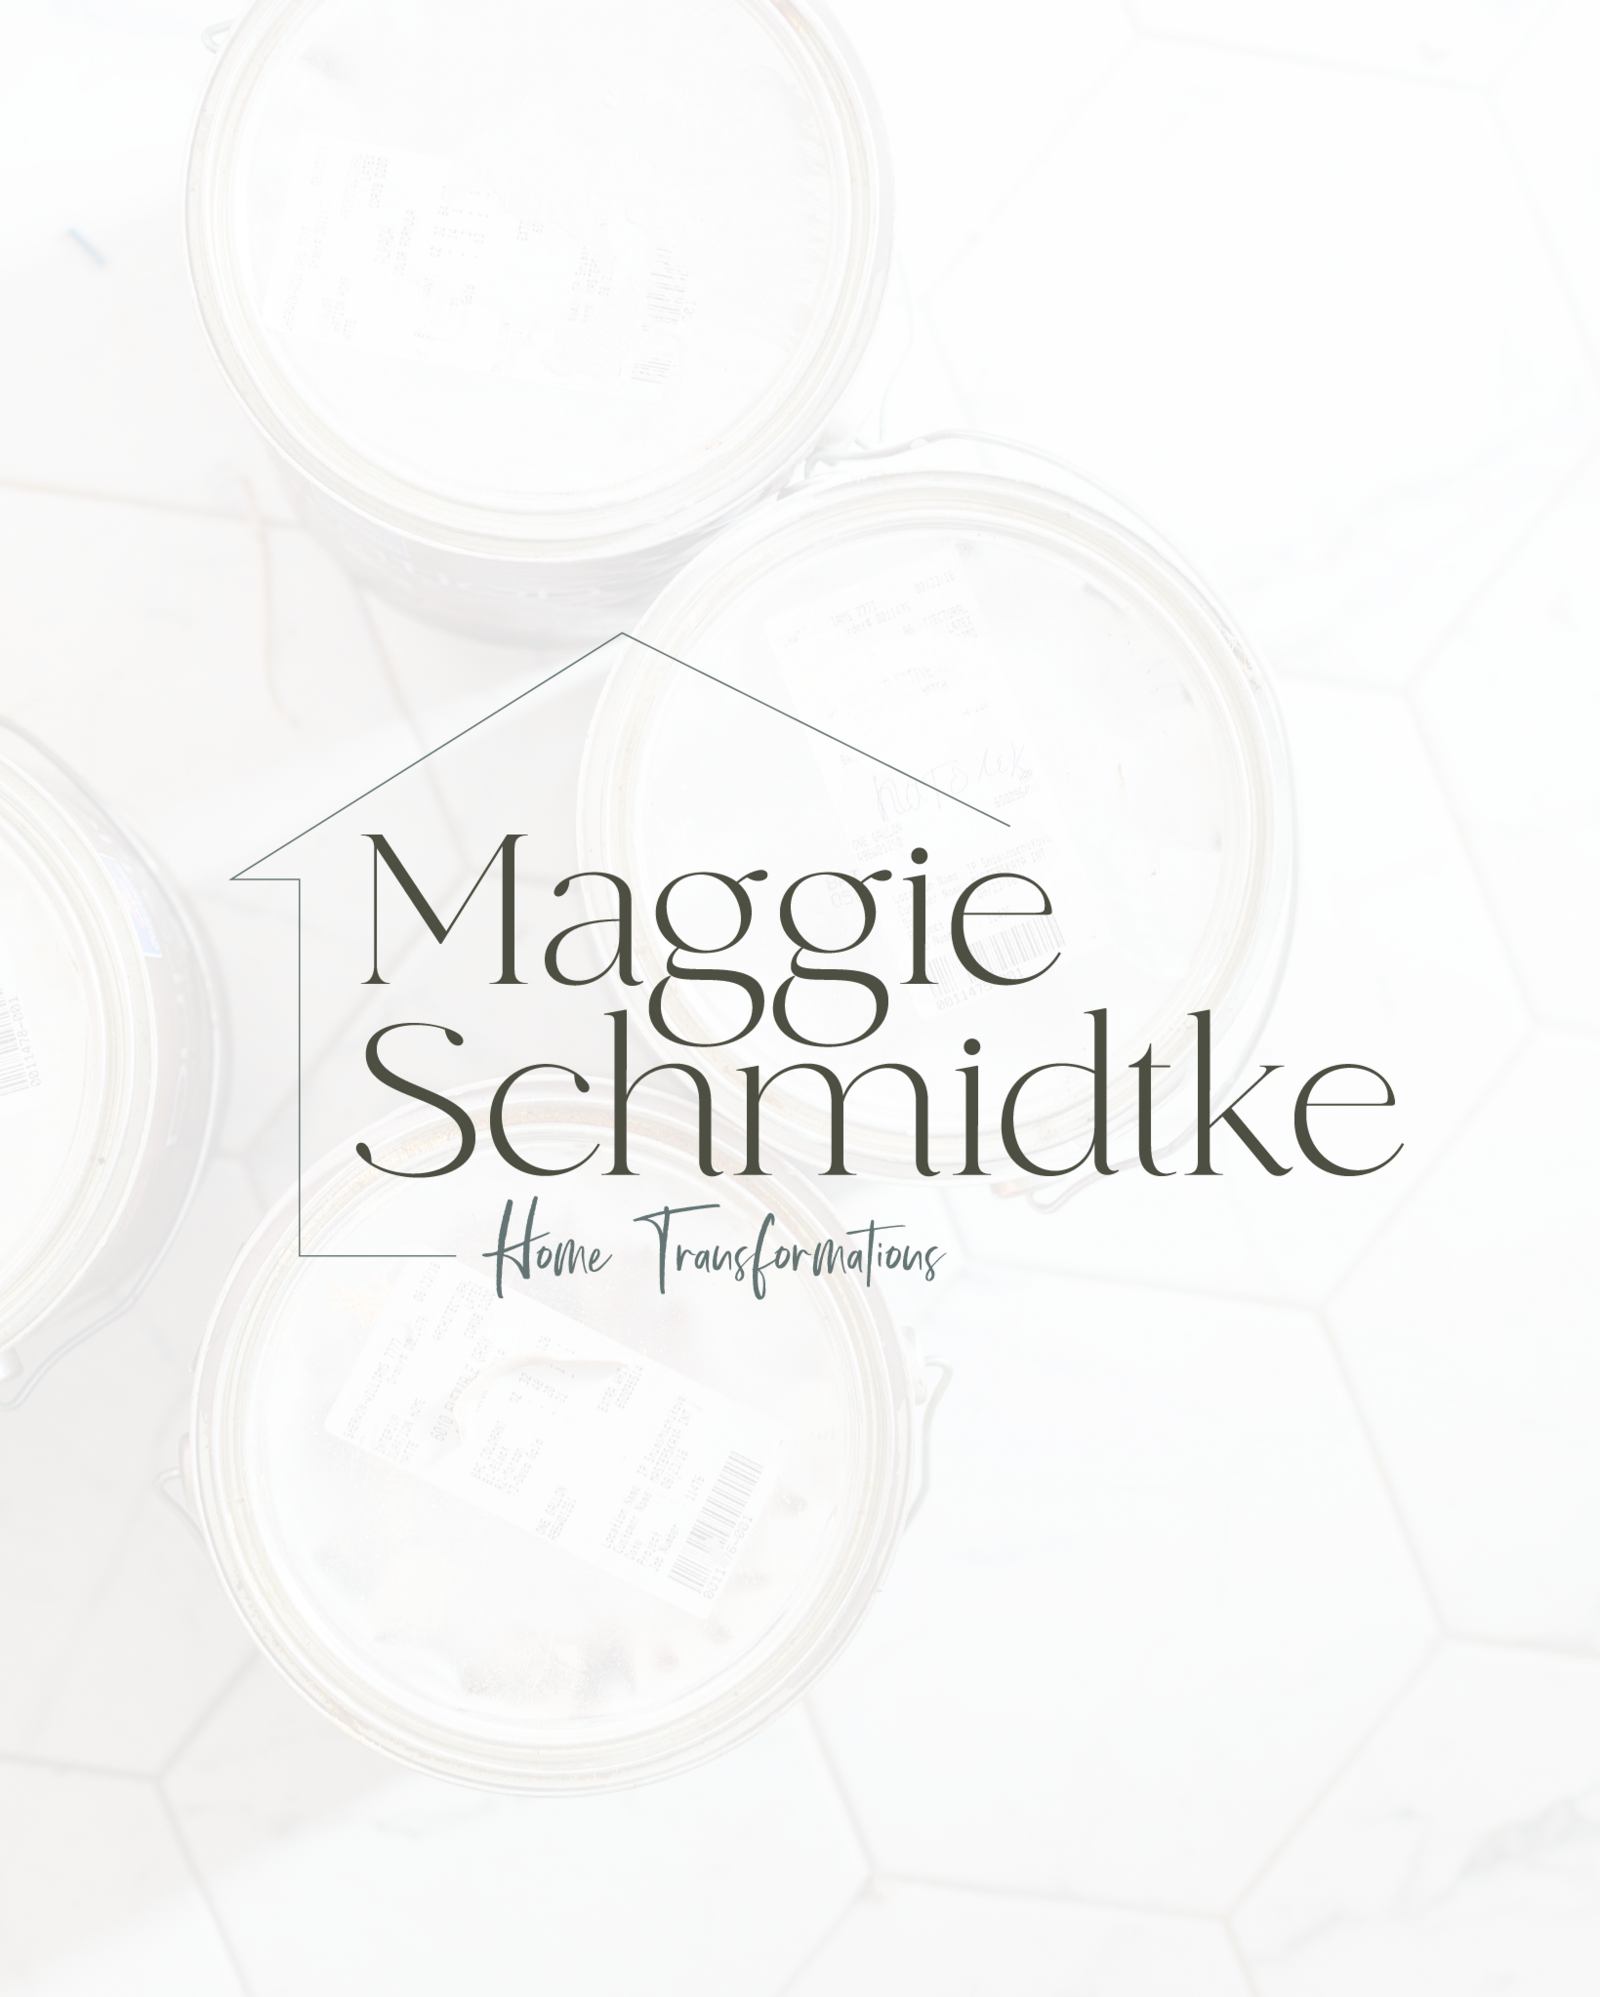 Maggie Schmidtke Home Transformations Brand